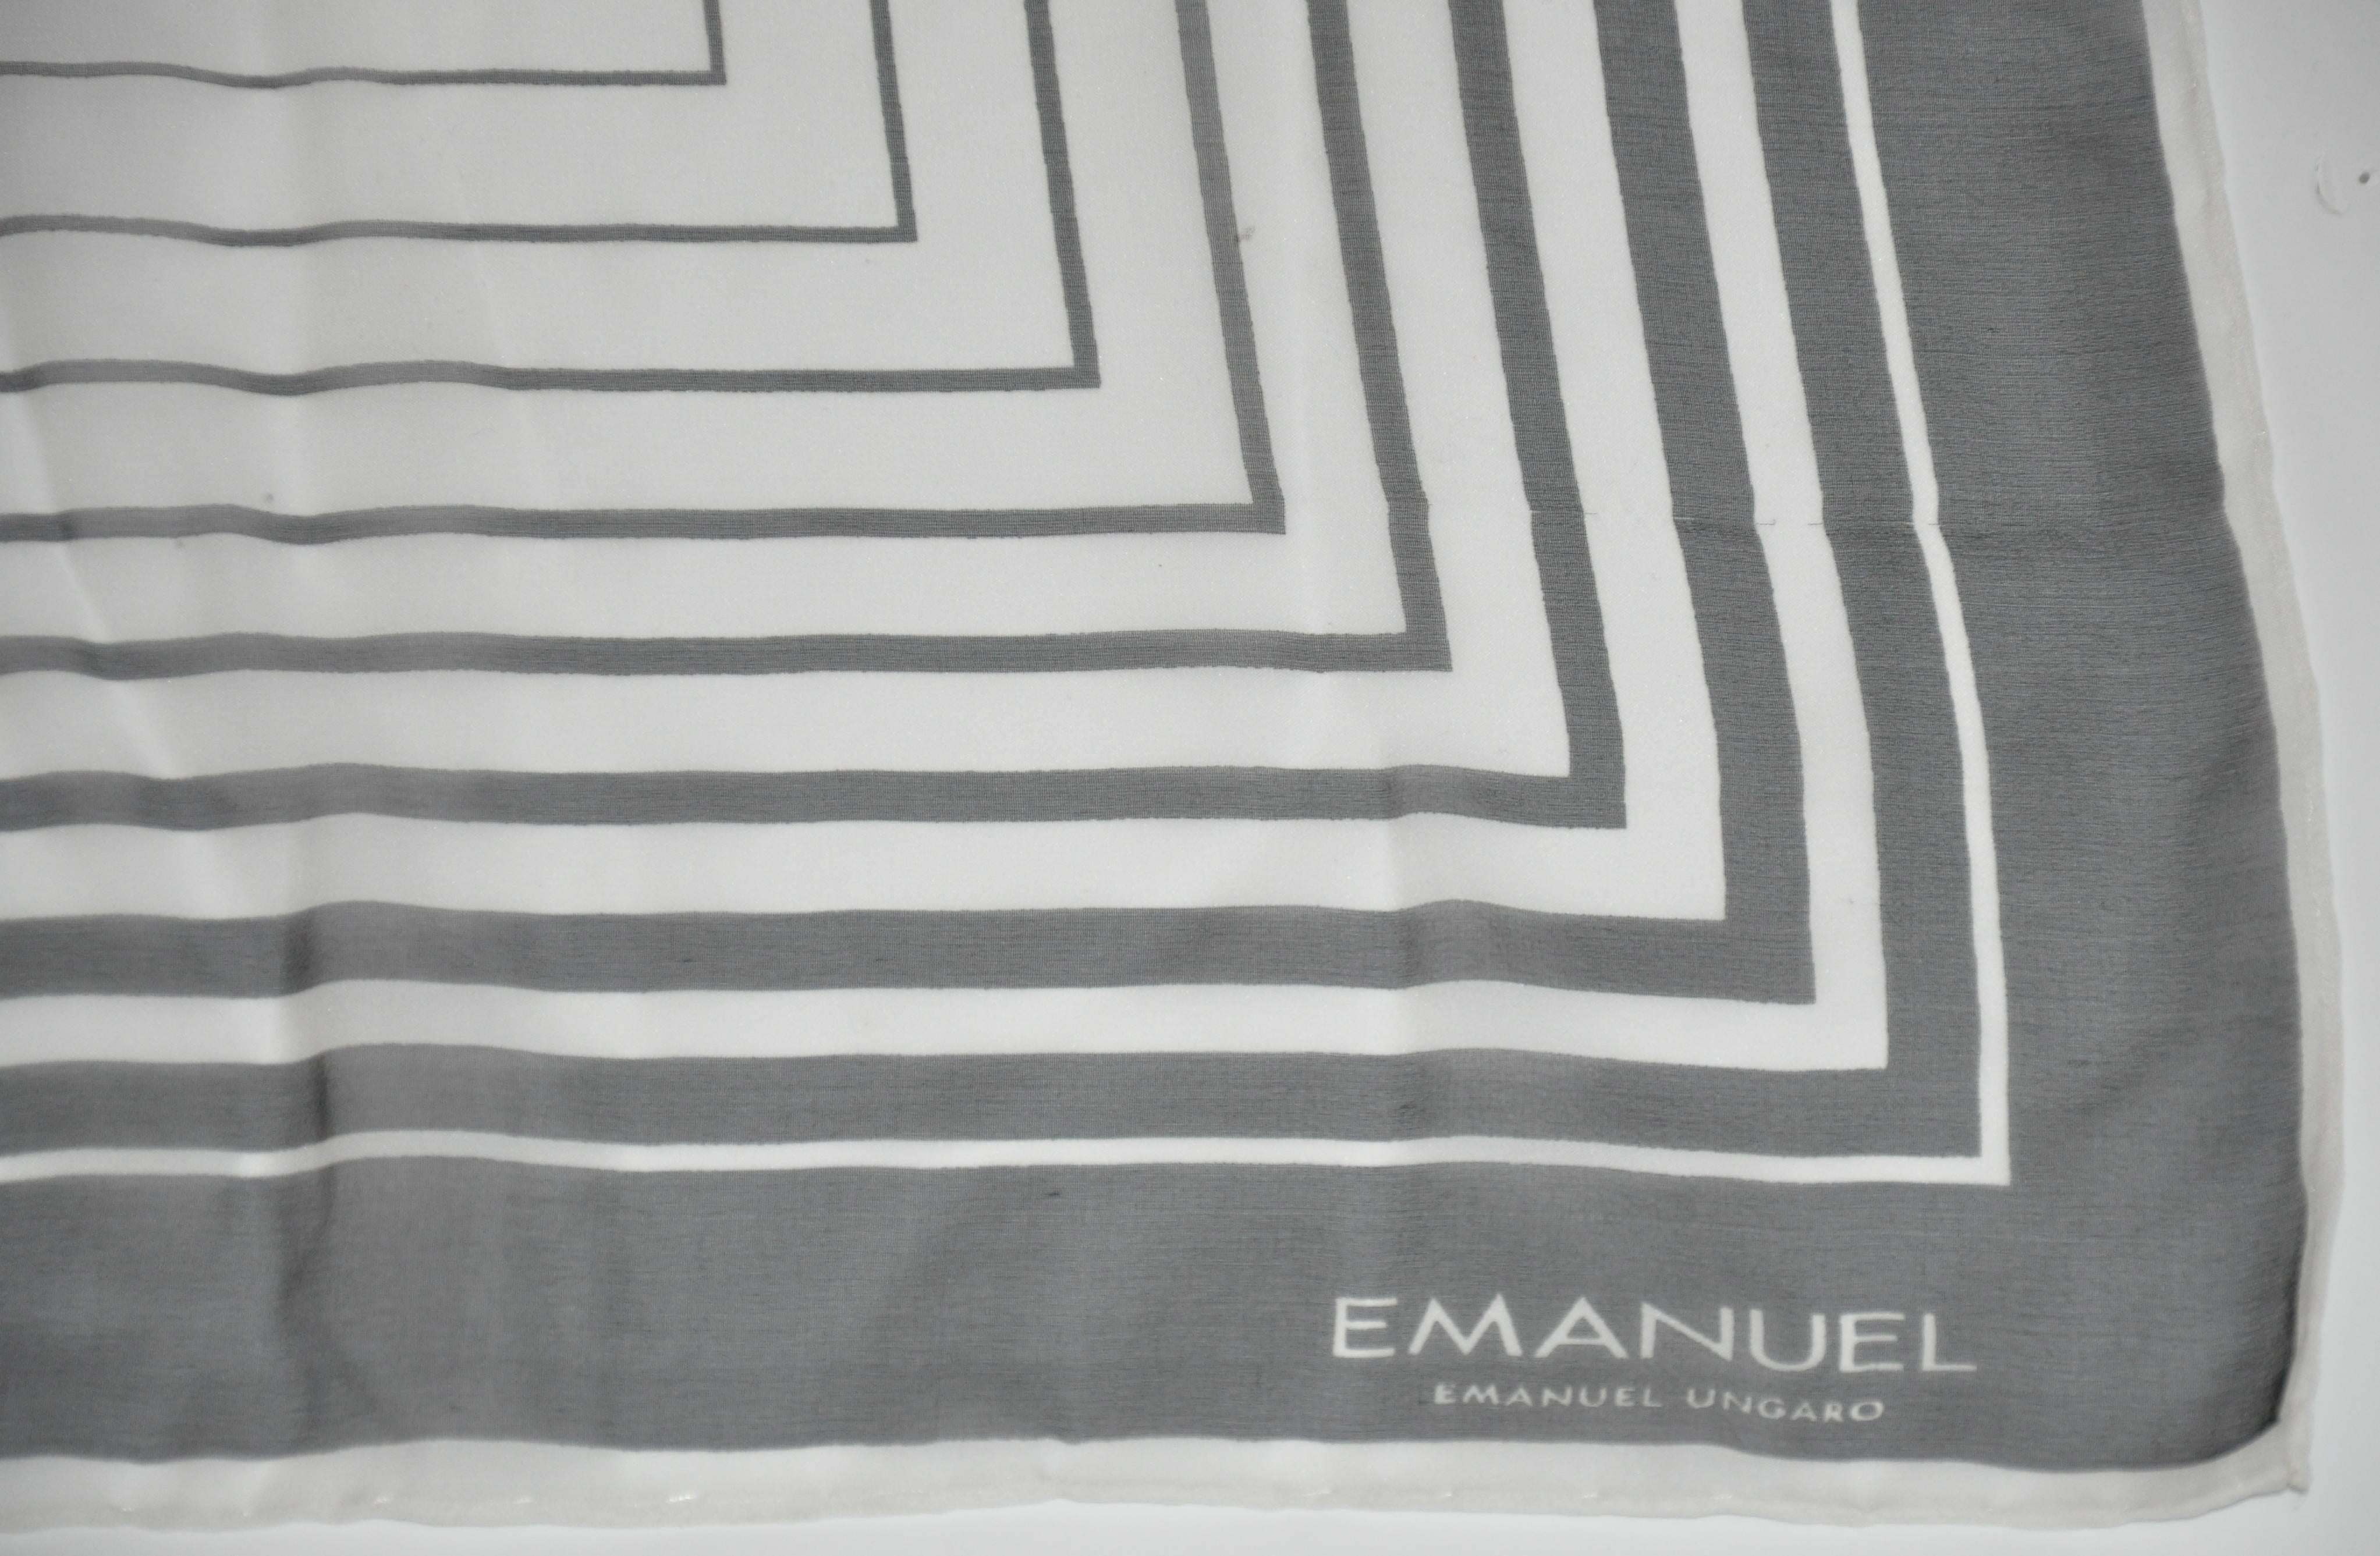         Emanuel Ungaro wonderfully elegant silk chiffon black & white scarf measures 34